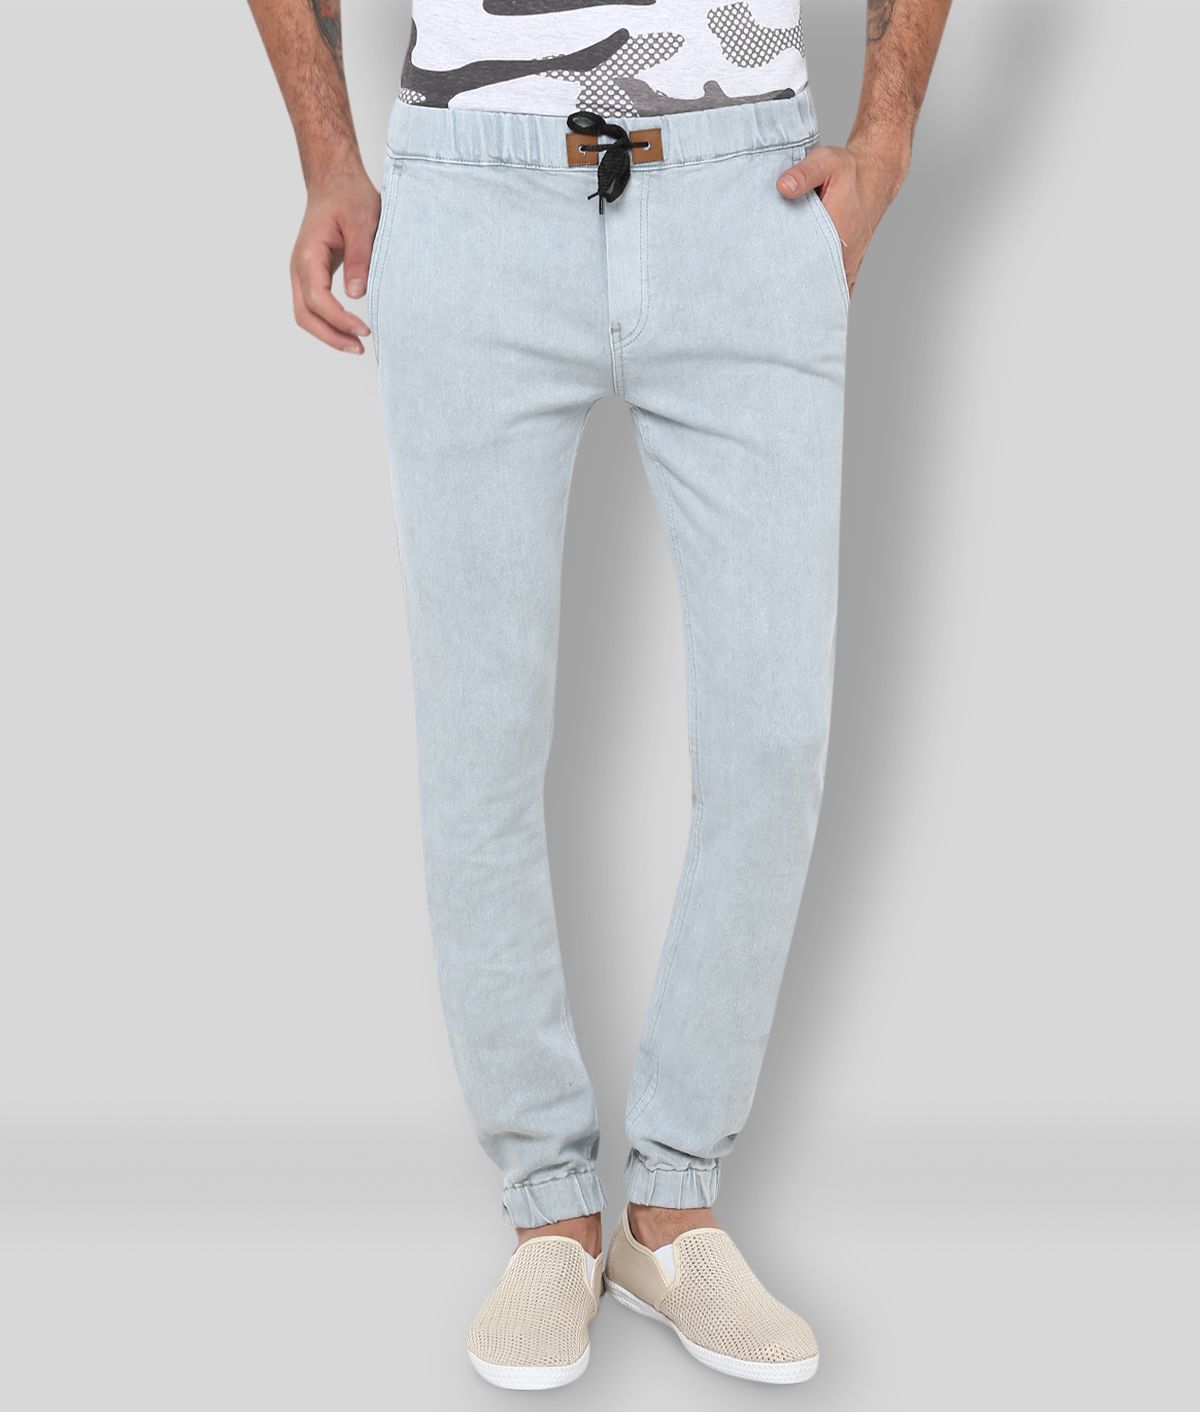     			Urbano Fashion - Light Blue Cotton Blend Slim Fit Men's Jeans ( Pack of 1 )